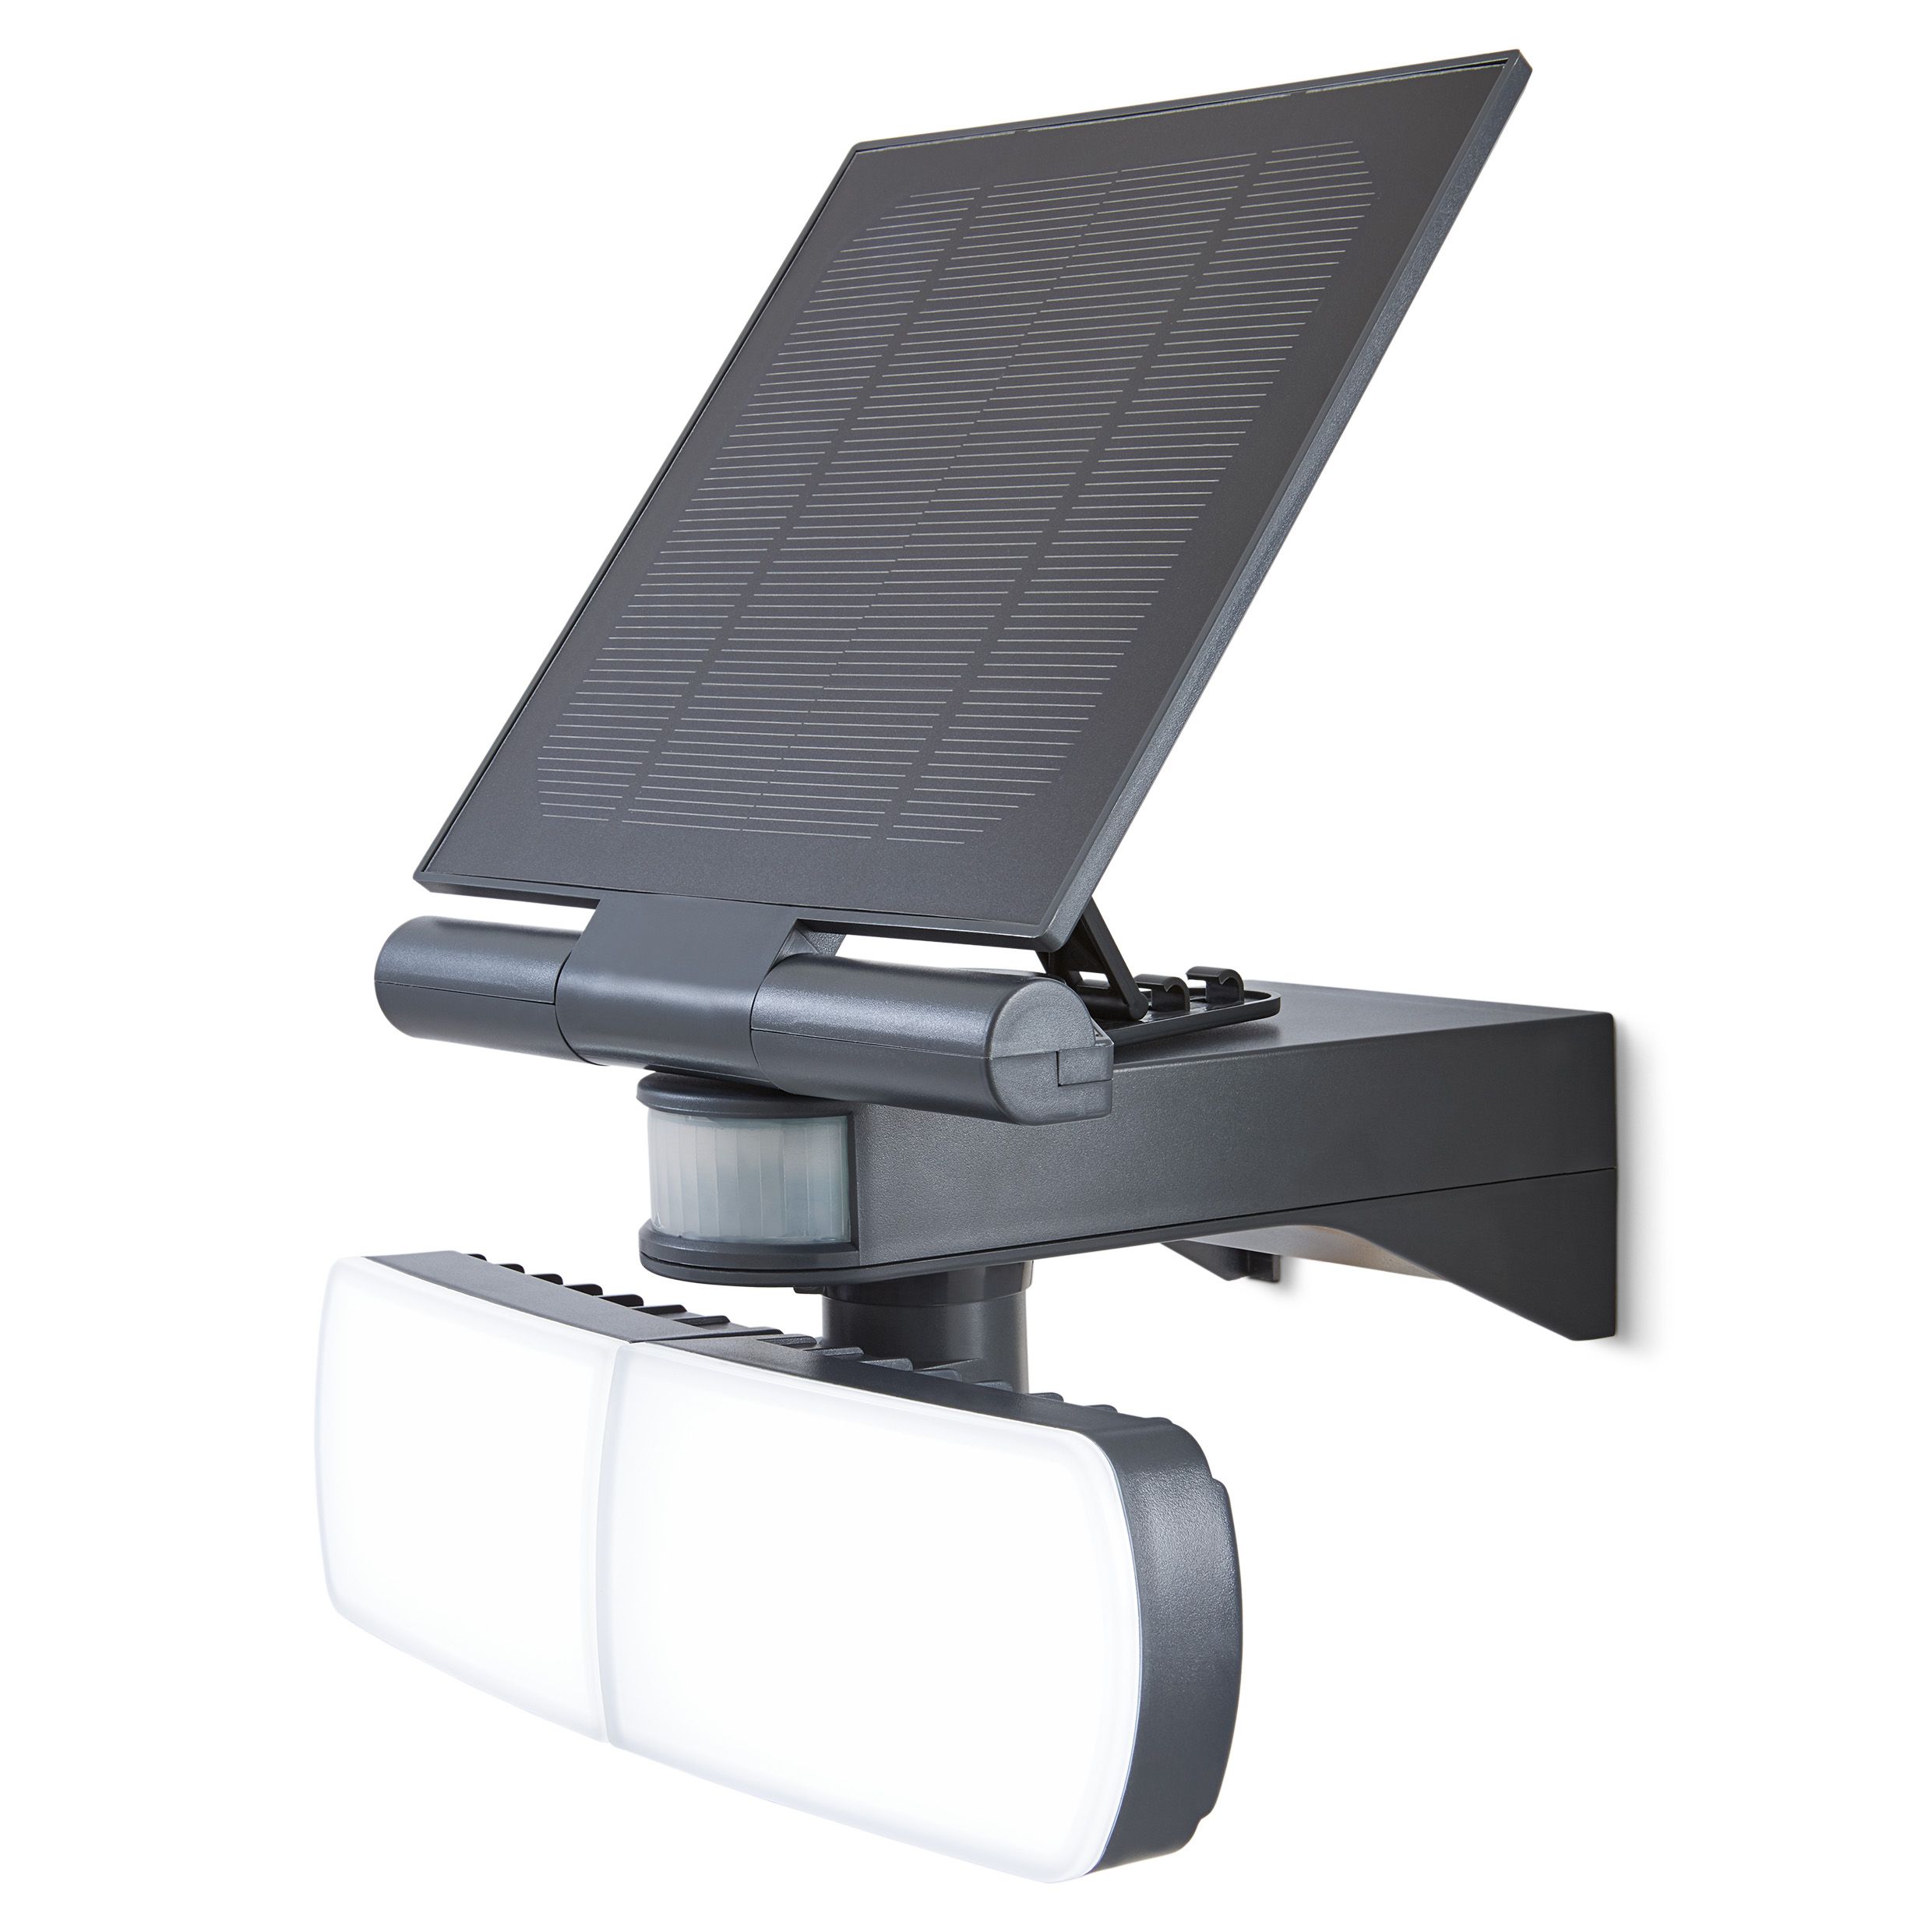 Blooma Brampton Charcoal grey Solar-powered LED PIR Motion sensor Outdoor Security light